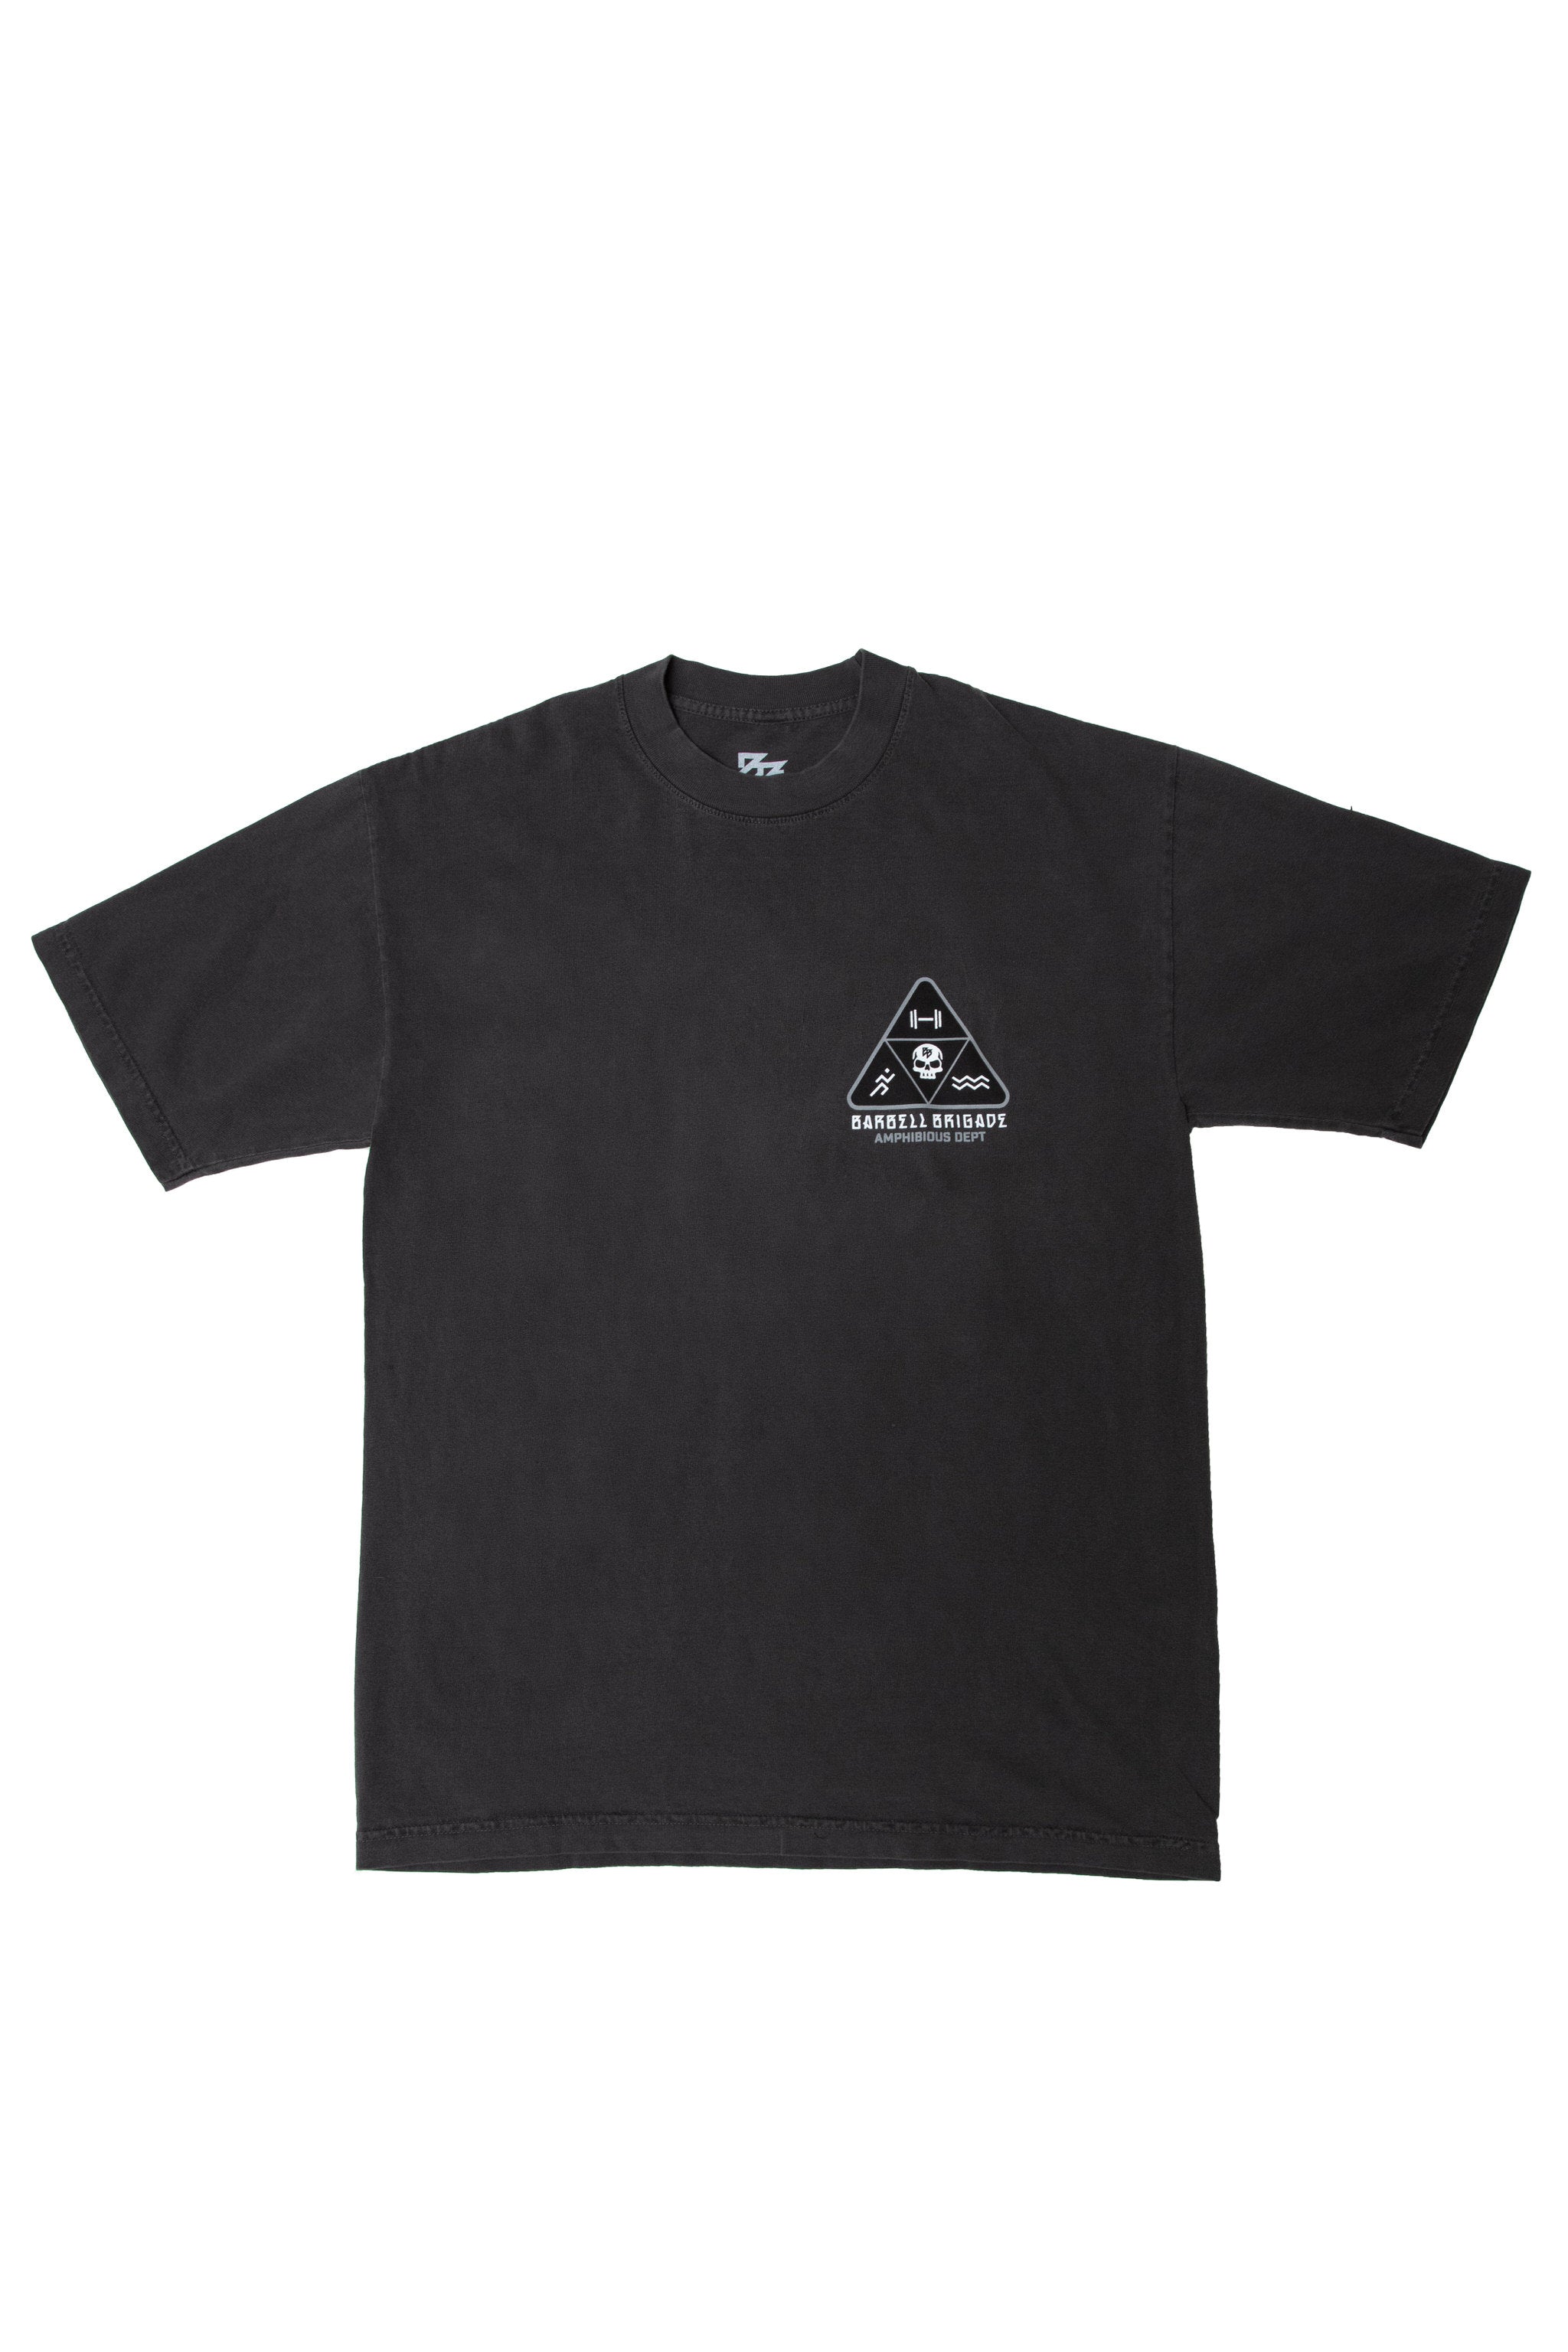 Tops & T-Shirts – Barbell Brigade